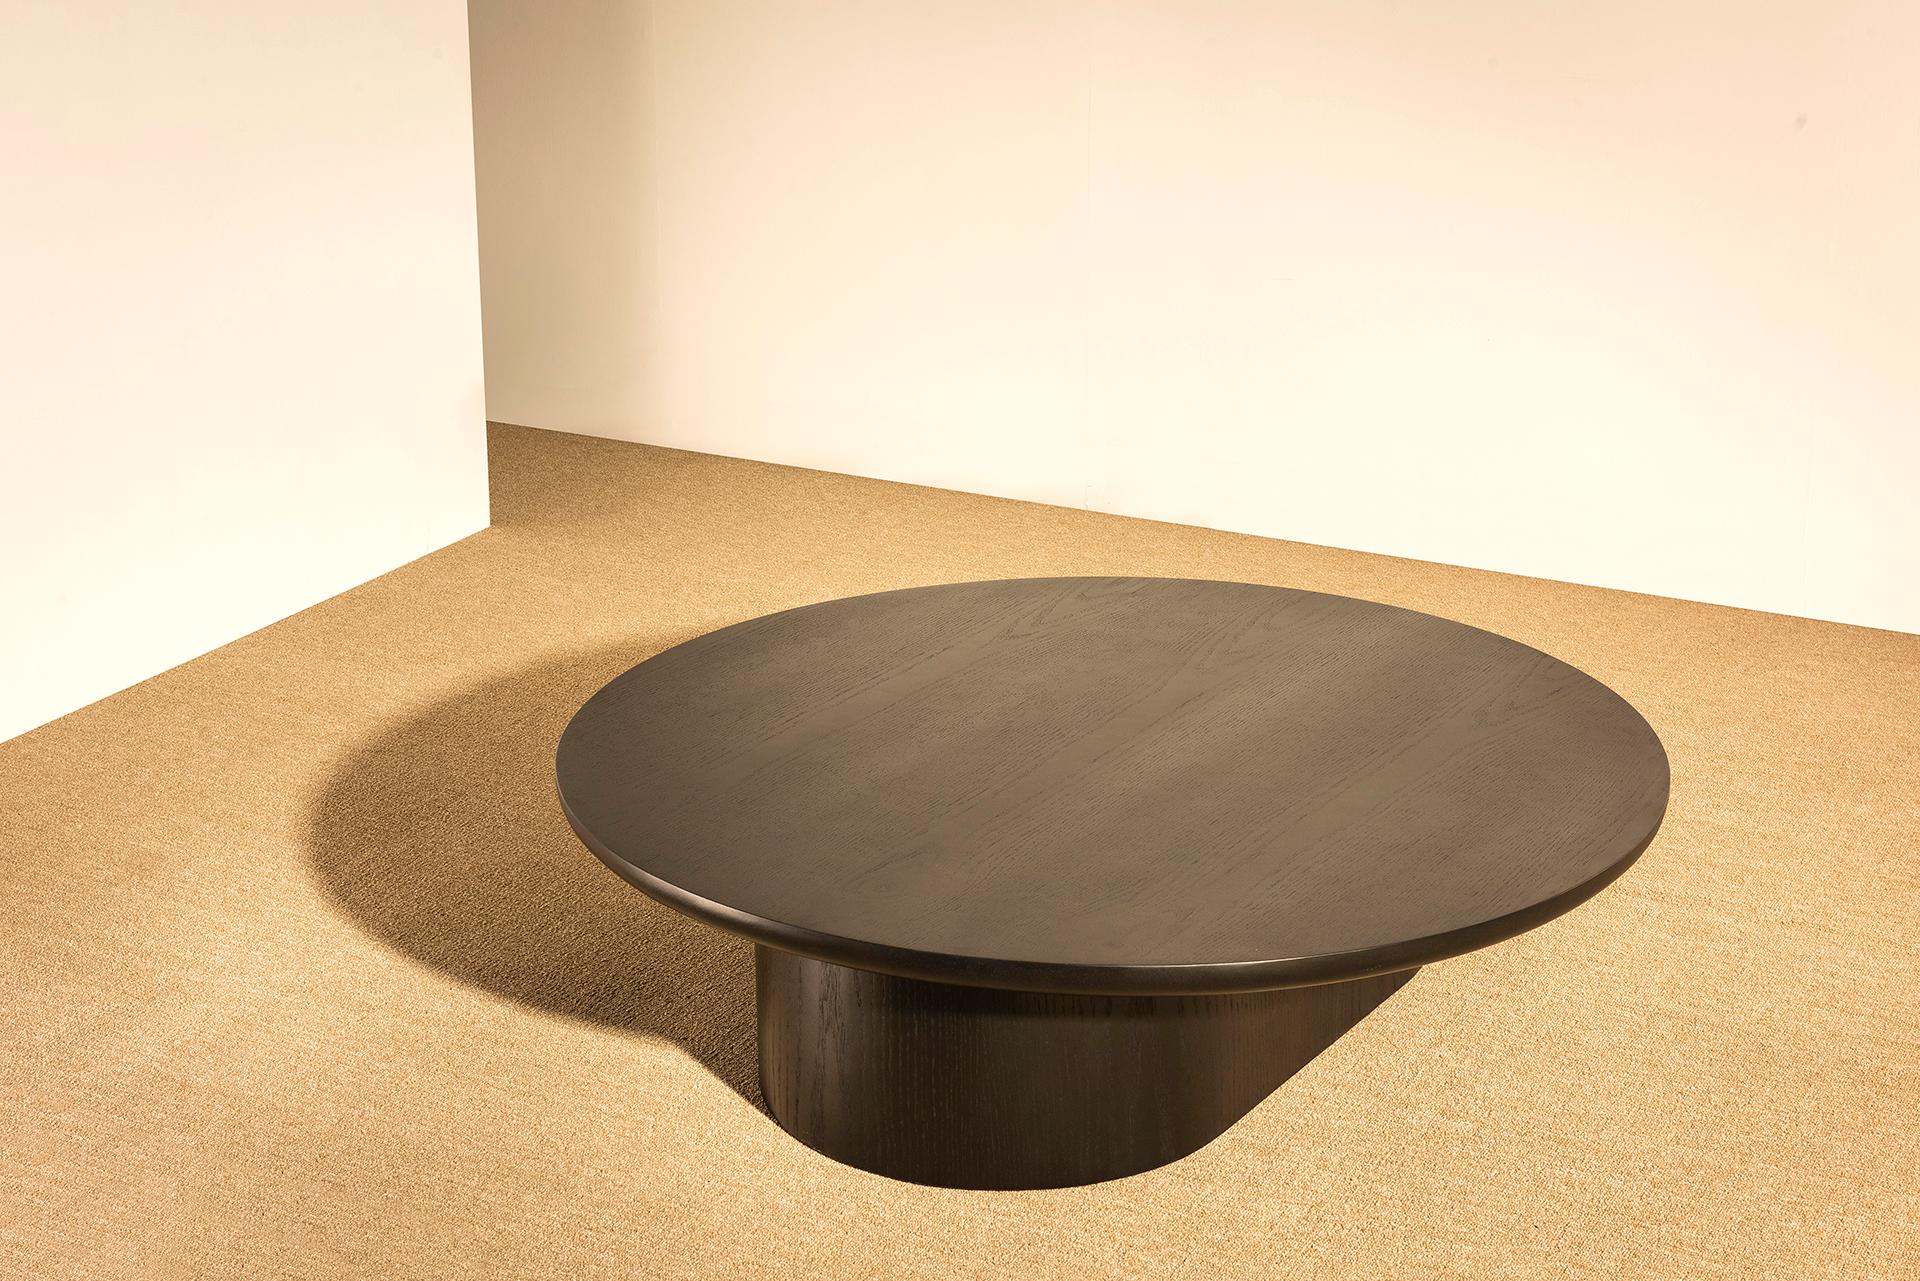 Brazilian Porto Set Center Table, by Rain, Contemporary Center Table, Laminated Oakwood For Sale